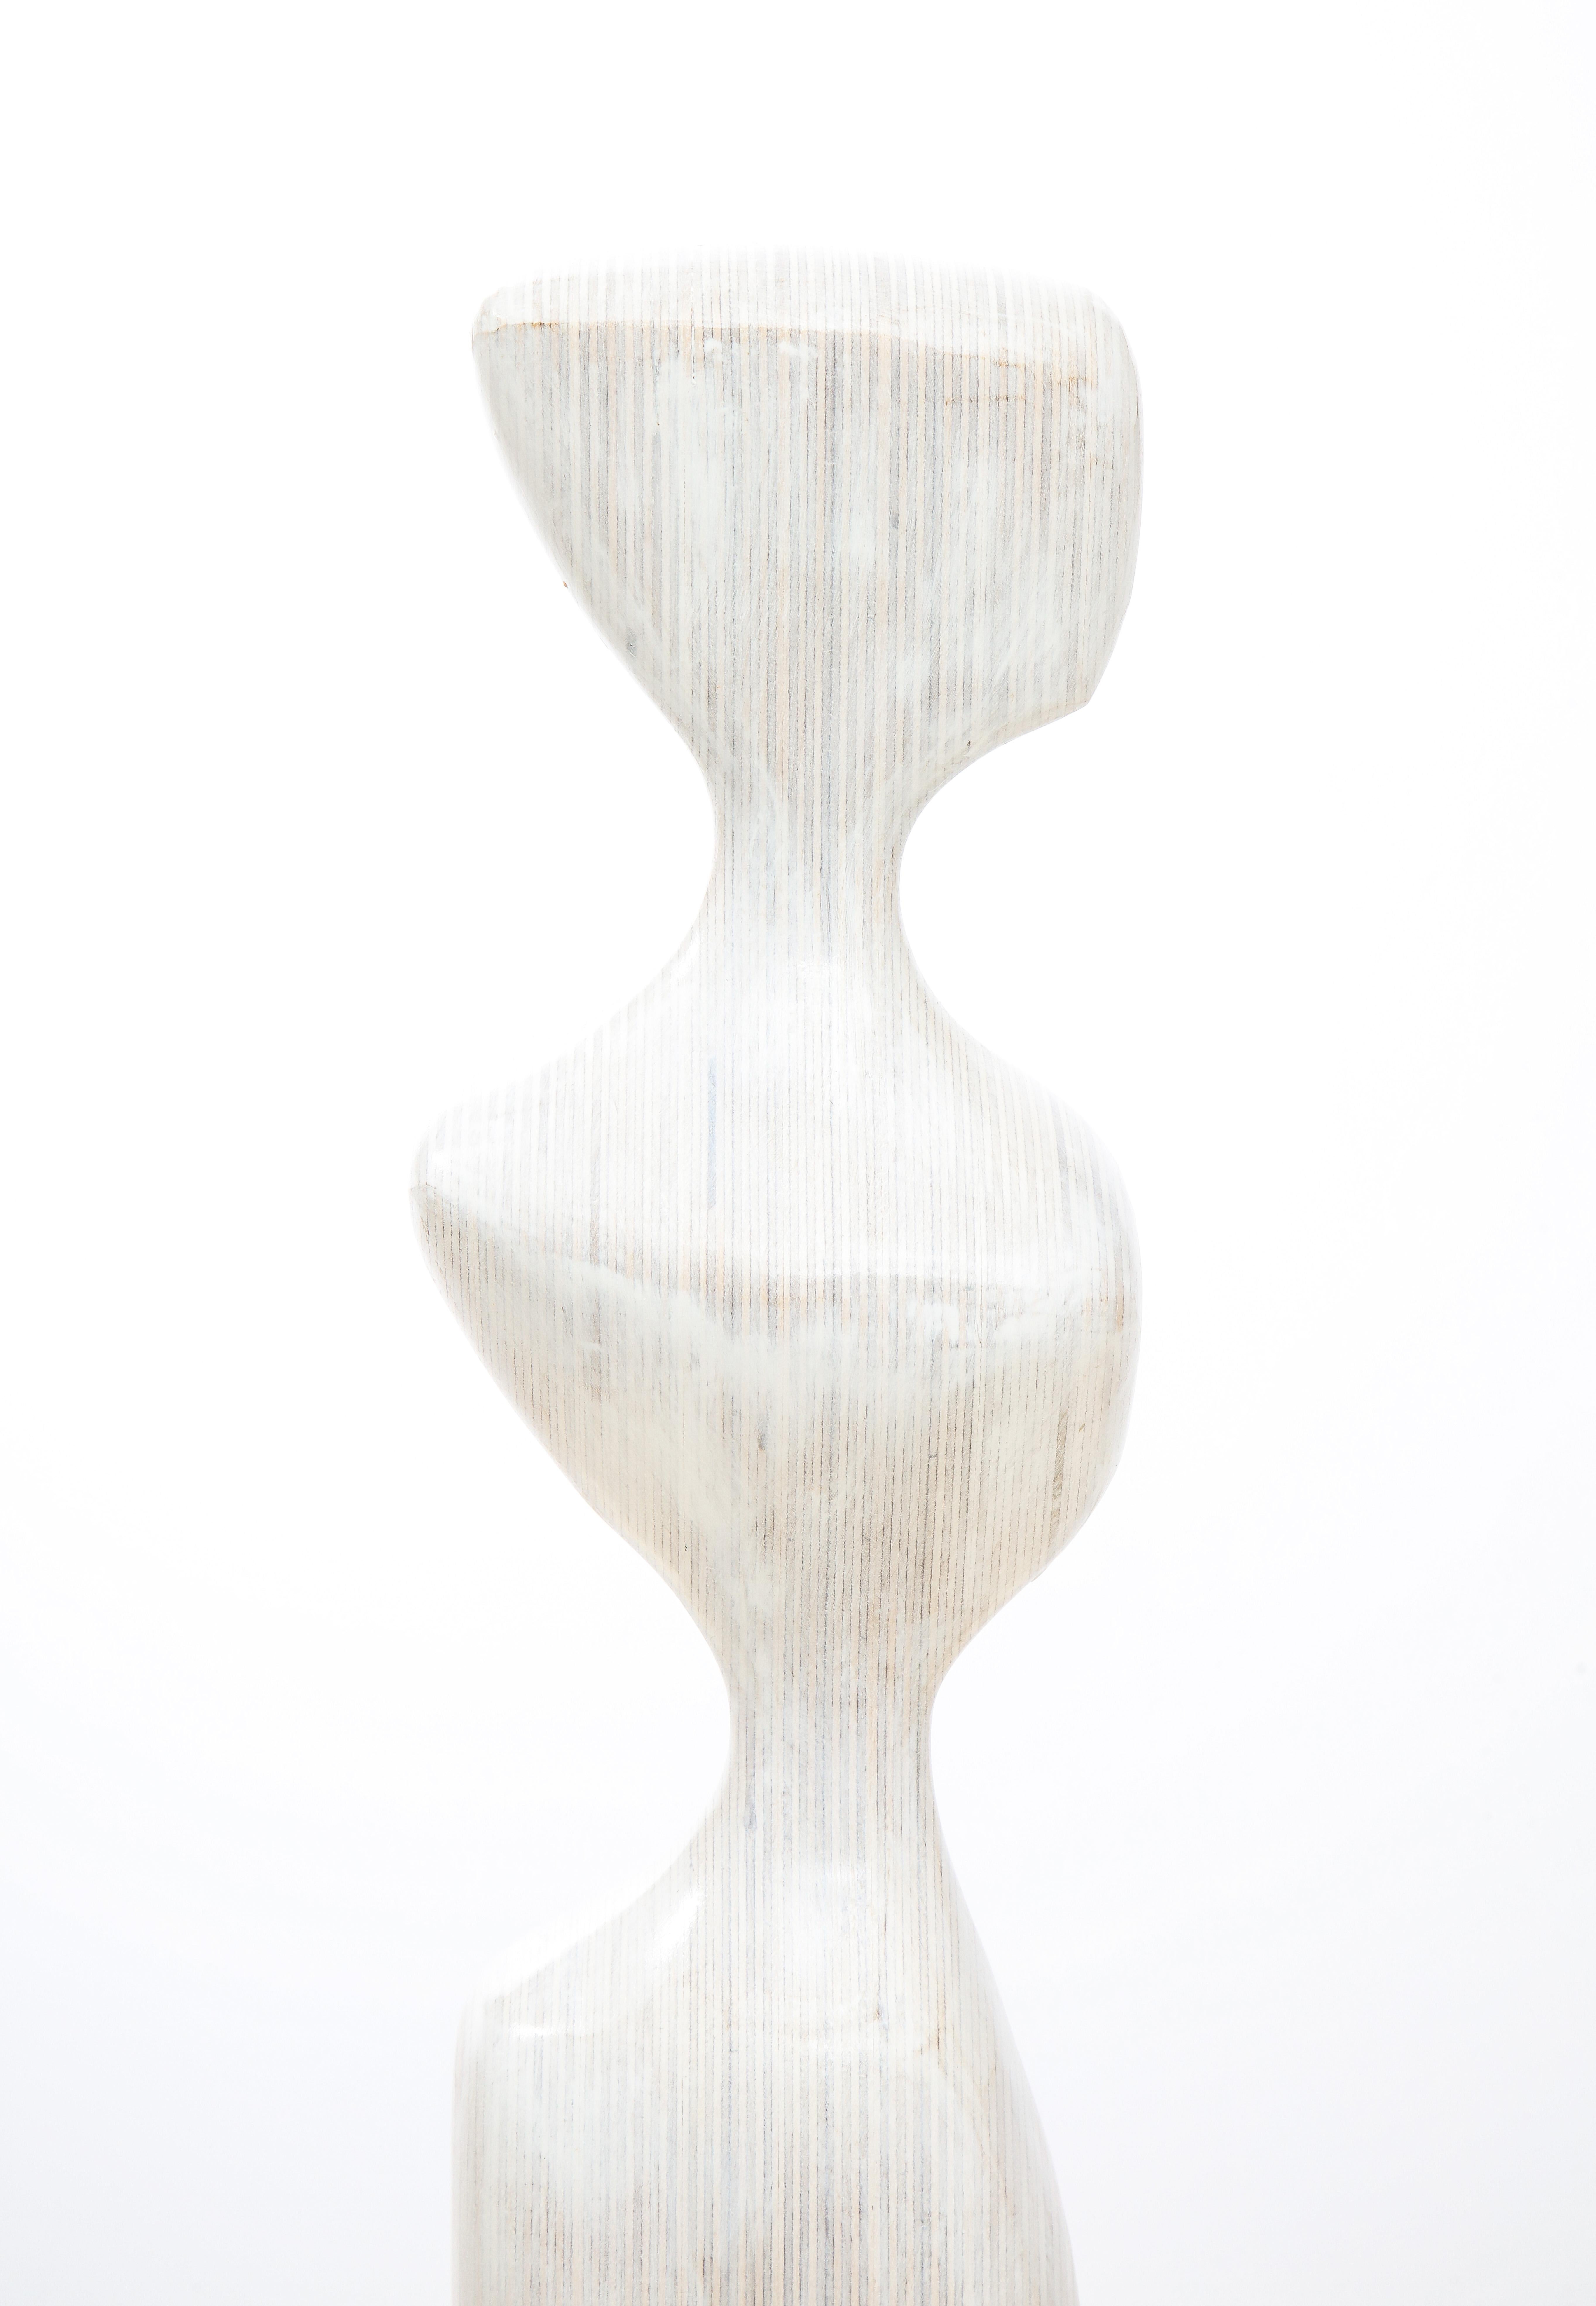 North American 'Figure Study III' Contemporary Wood Figurative Sculpture